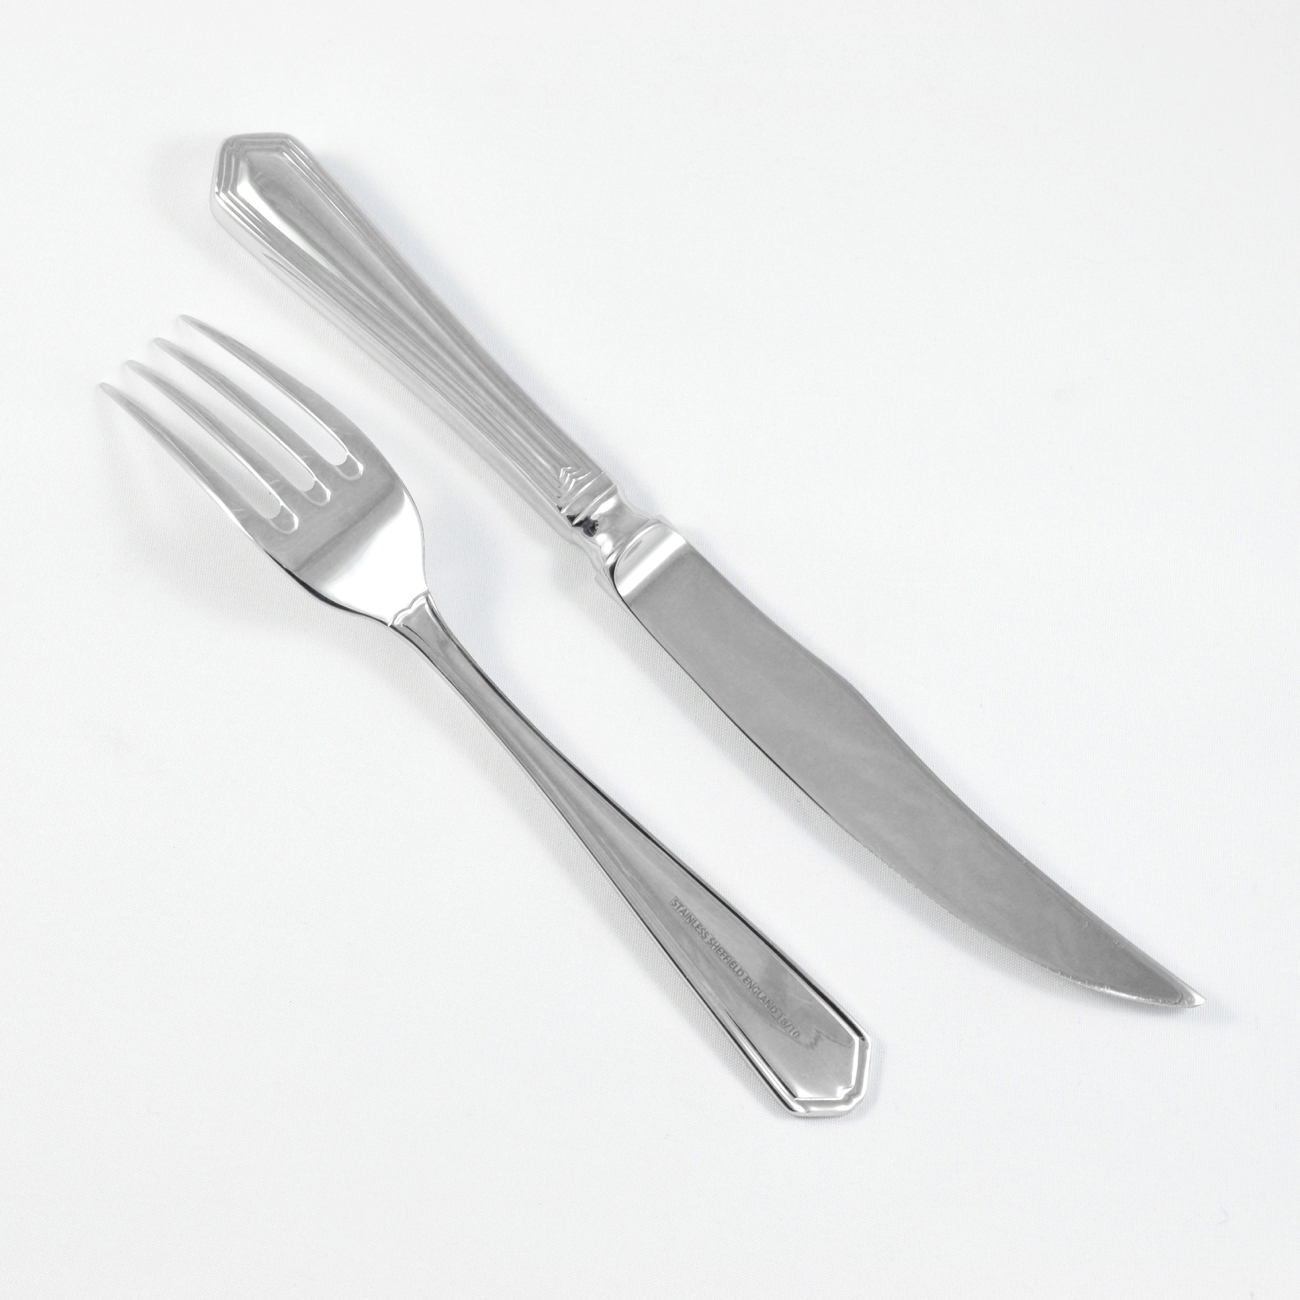 Stainless Steel Steak Knives & Forks – The Sheffield Cutlery Shop